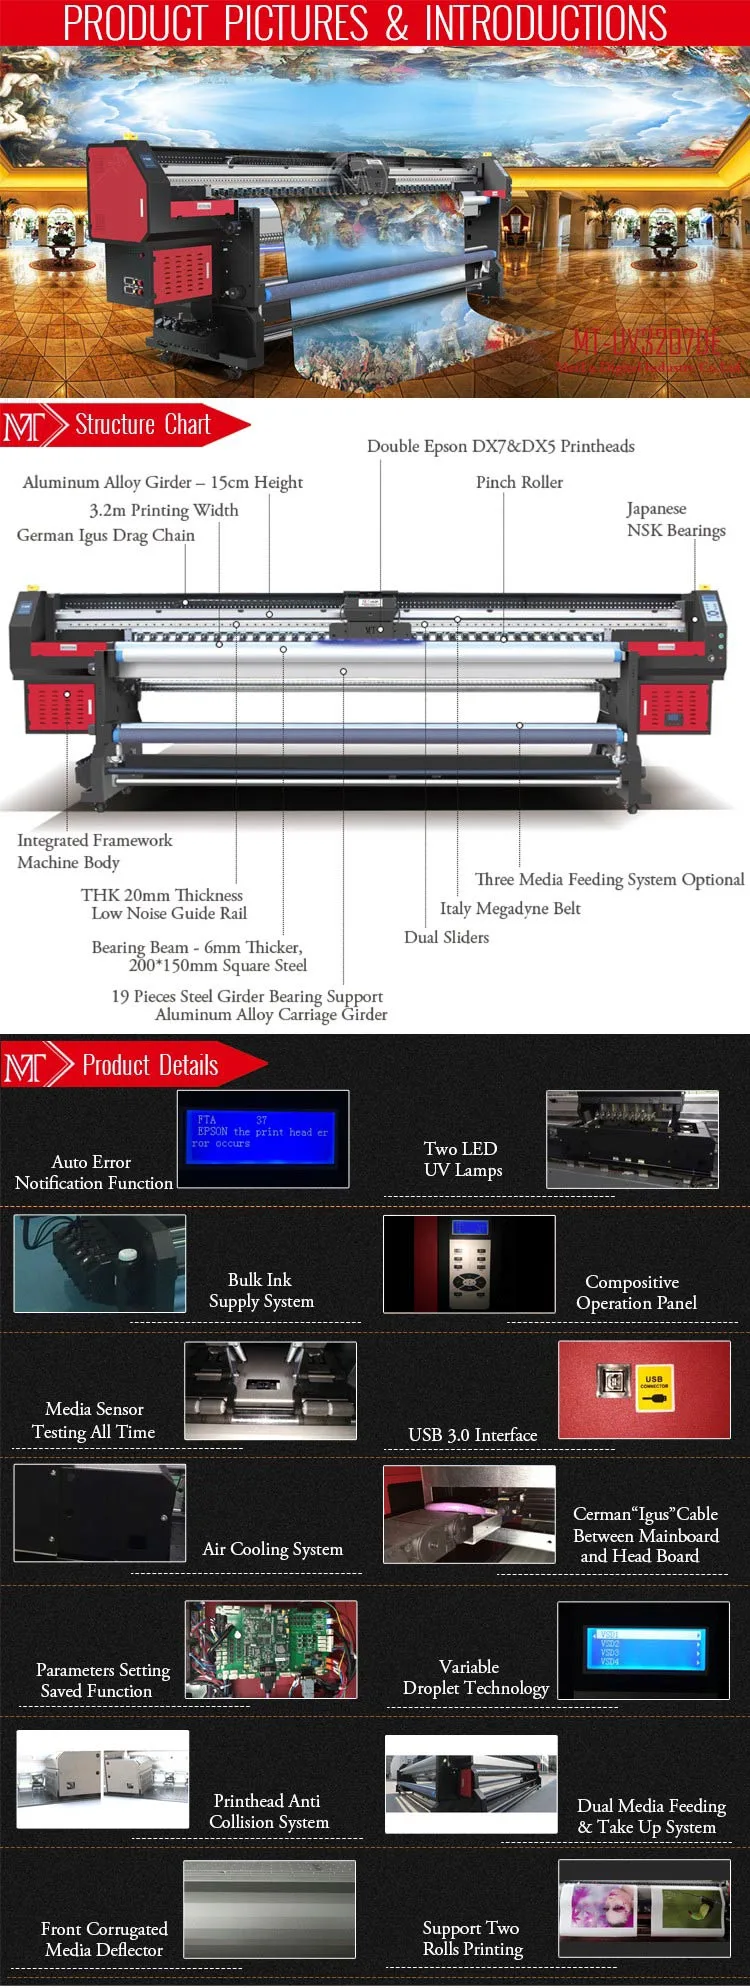 Mt Digital 3.2meters UV Inkjet Printer with Epson Dx5 Dx7 Printhead Mt-UV3207de